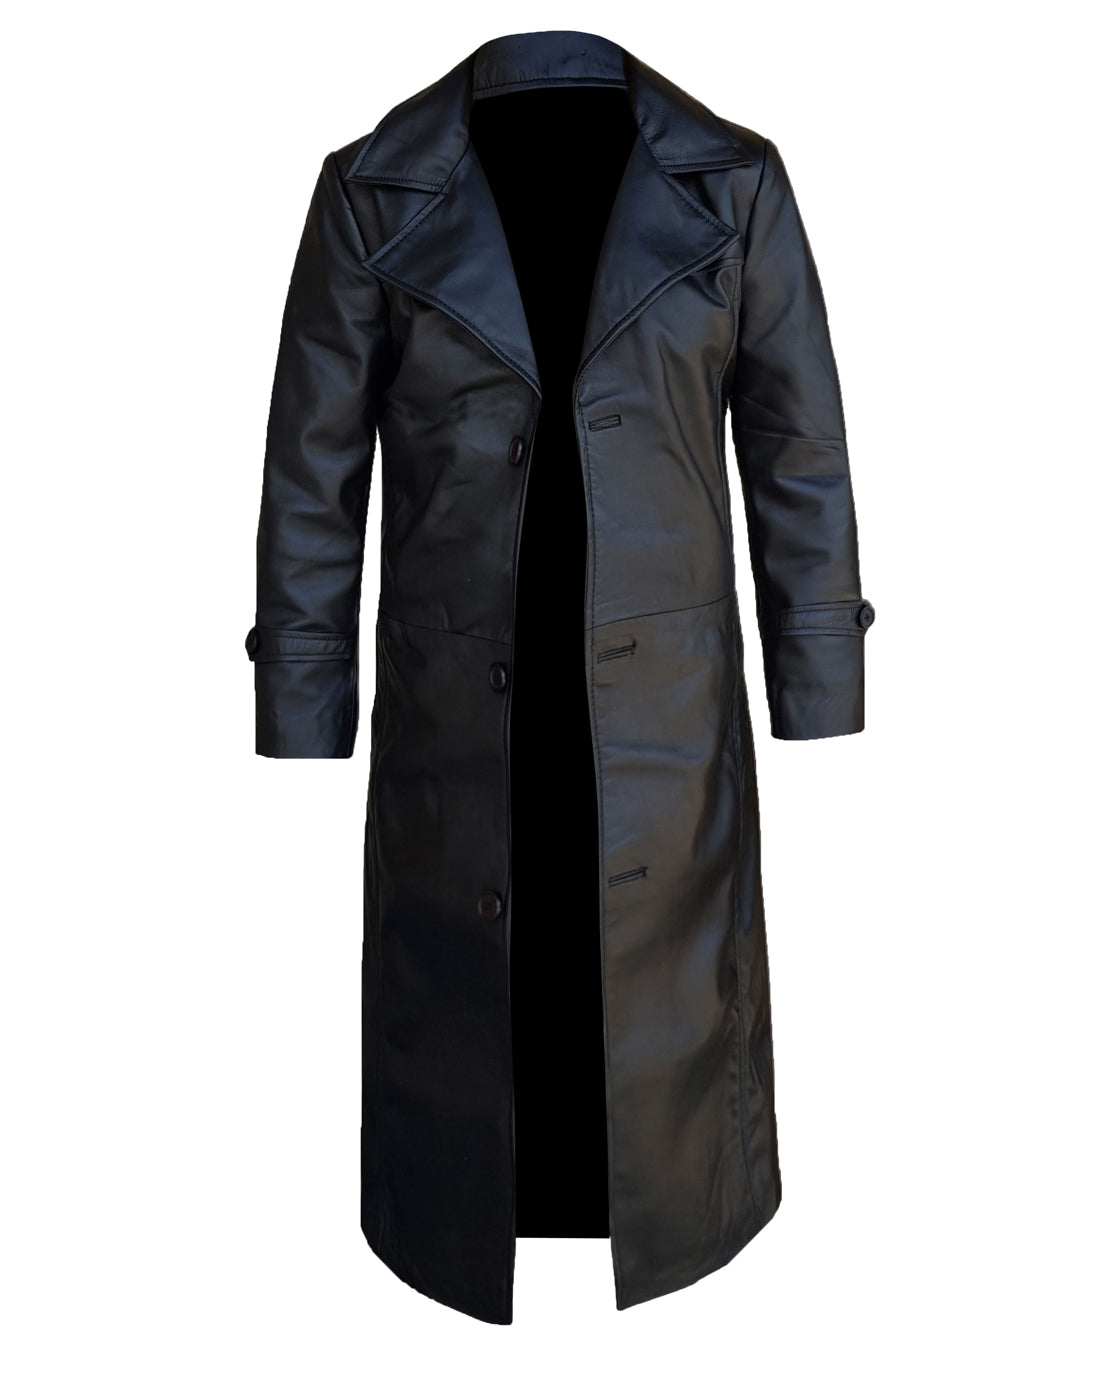 Men's Black Trench Coat - Long Black Leather Trench Coat For Men